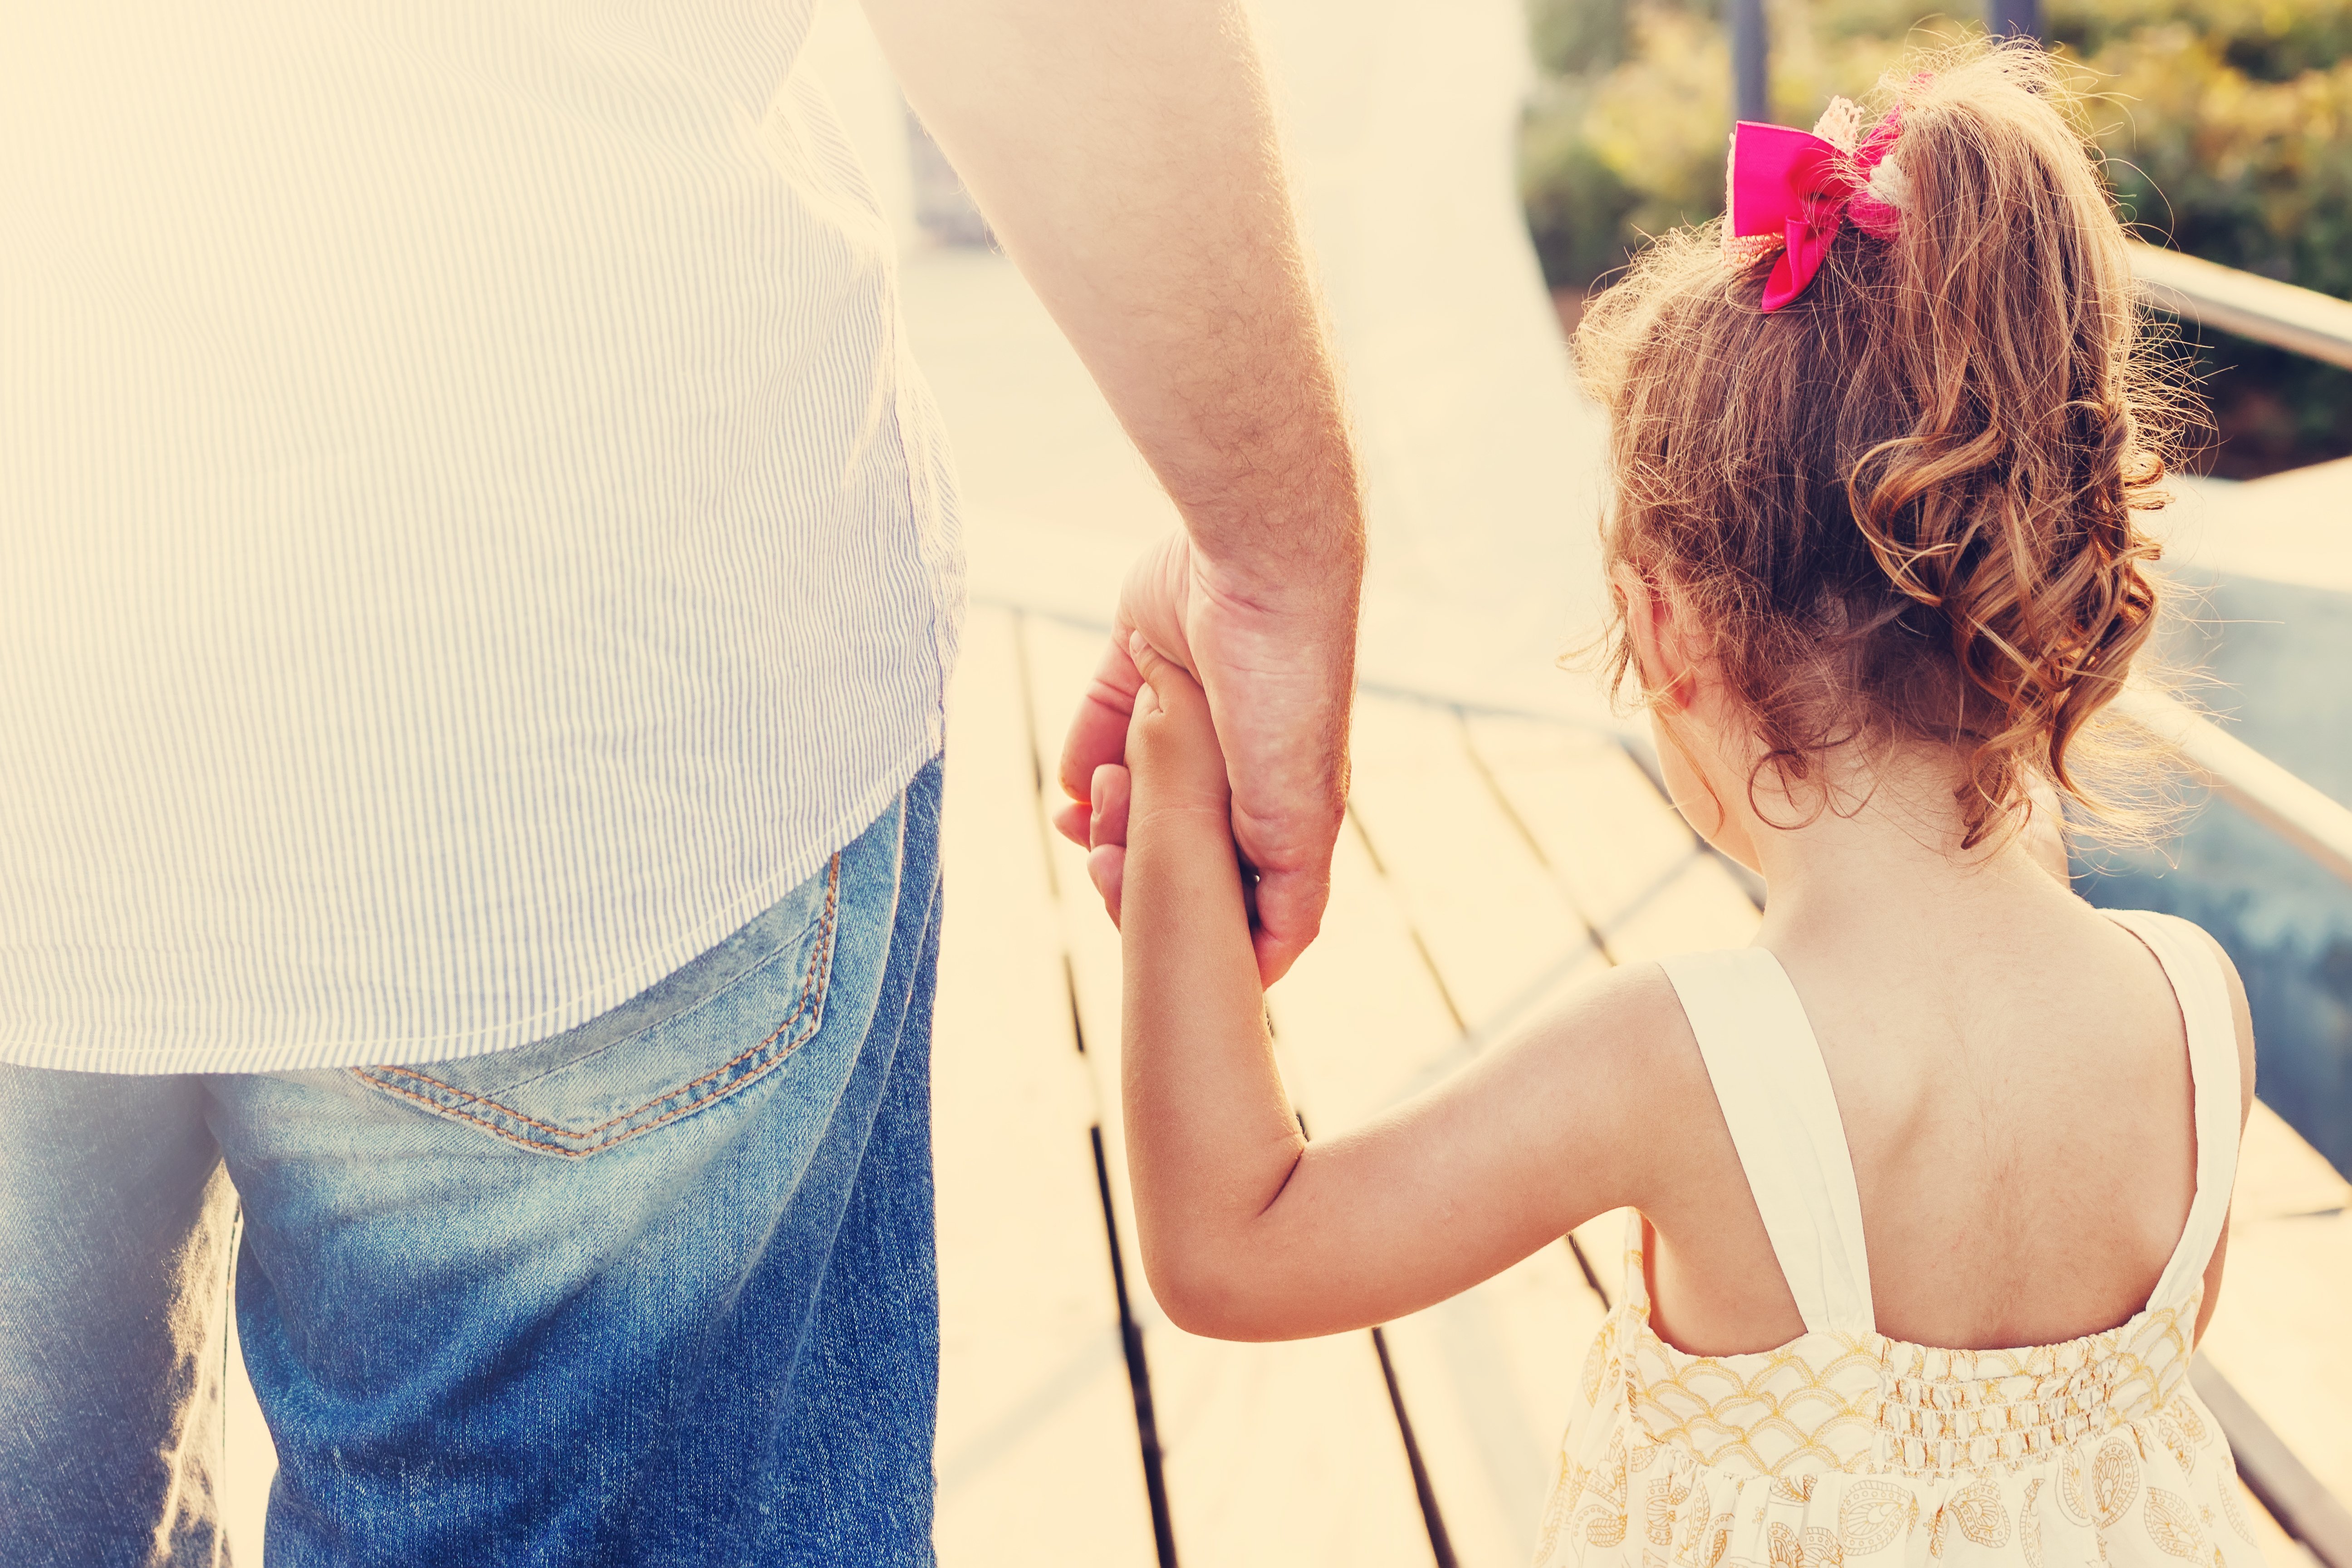 Padre e hija tomados de la mano. Fuente: Shutterstock